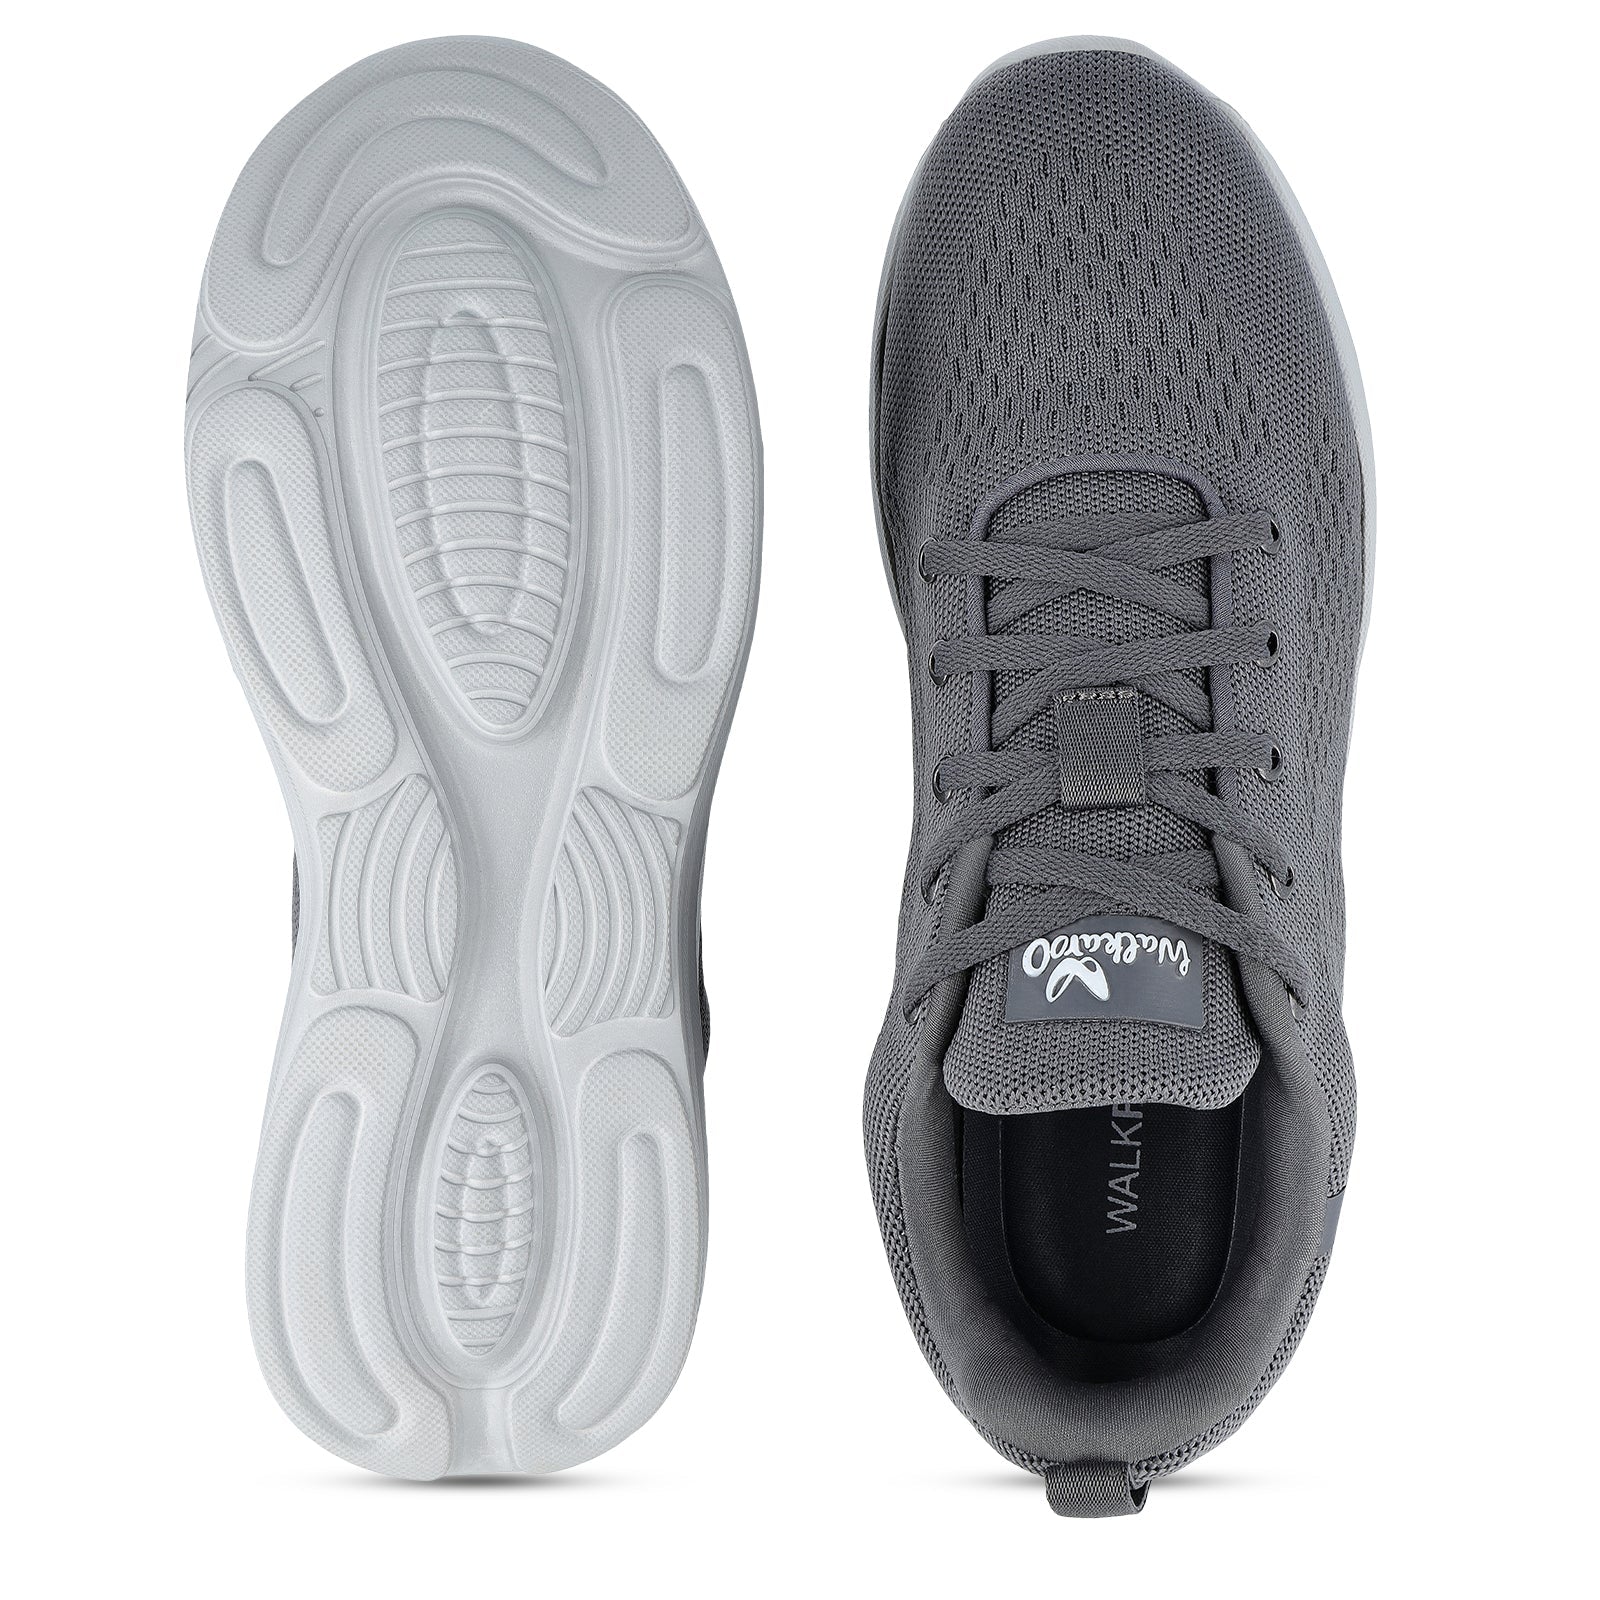 Buy WALKAROO Gents Navy Blue Sports Shoe (XS9757) 7 UK at Amazon.in